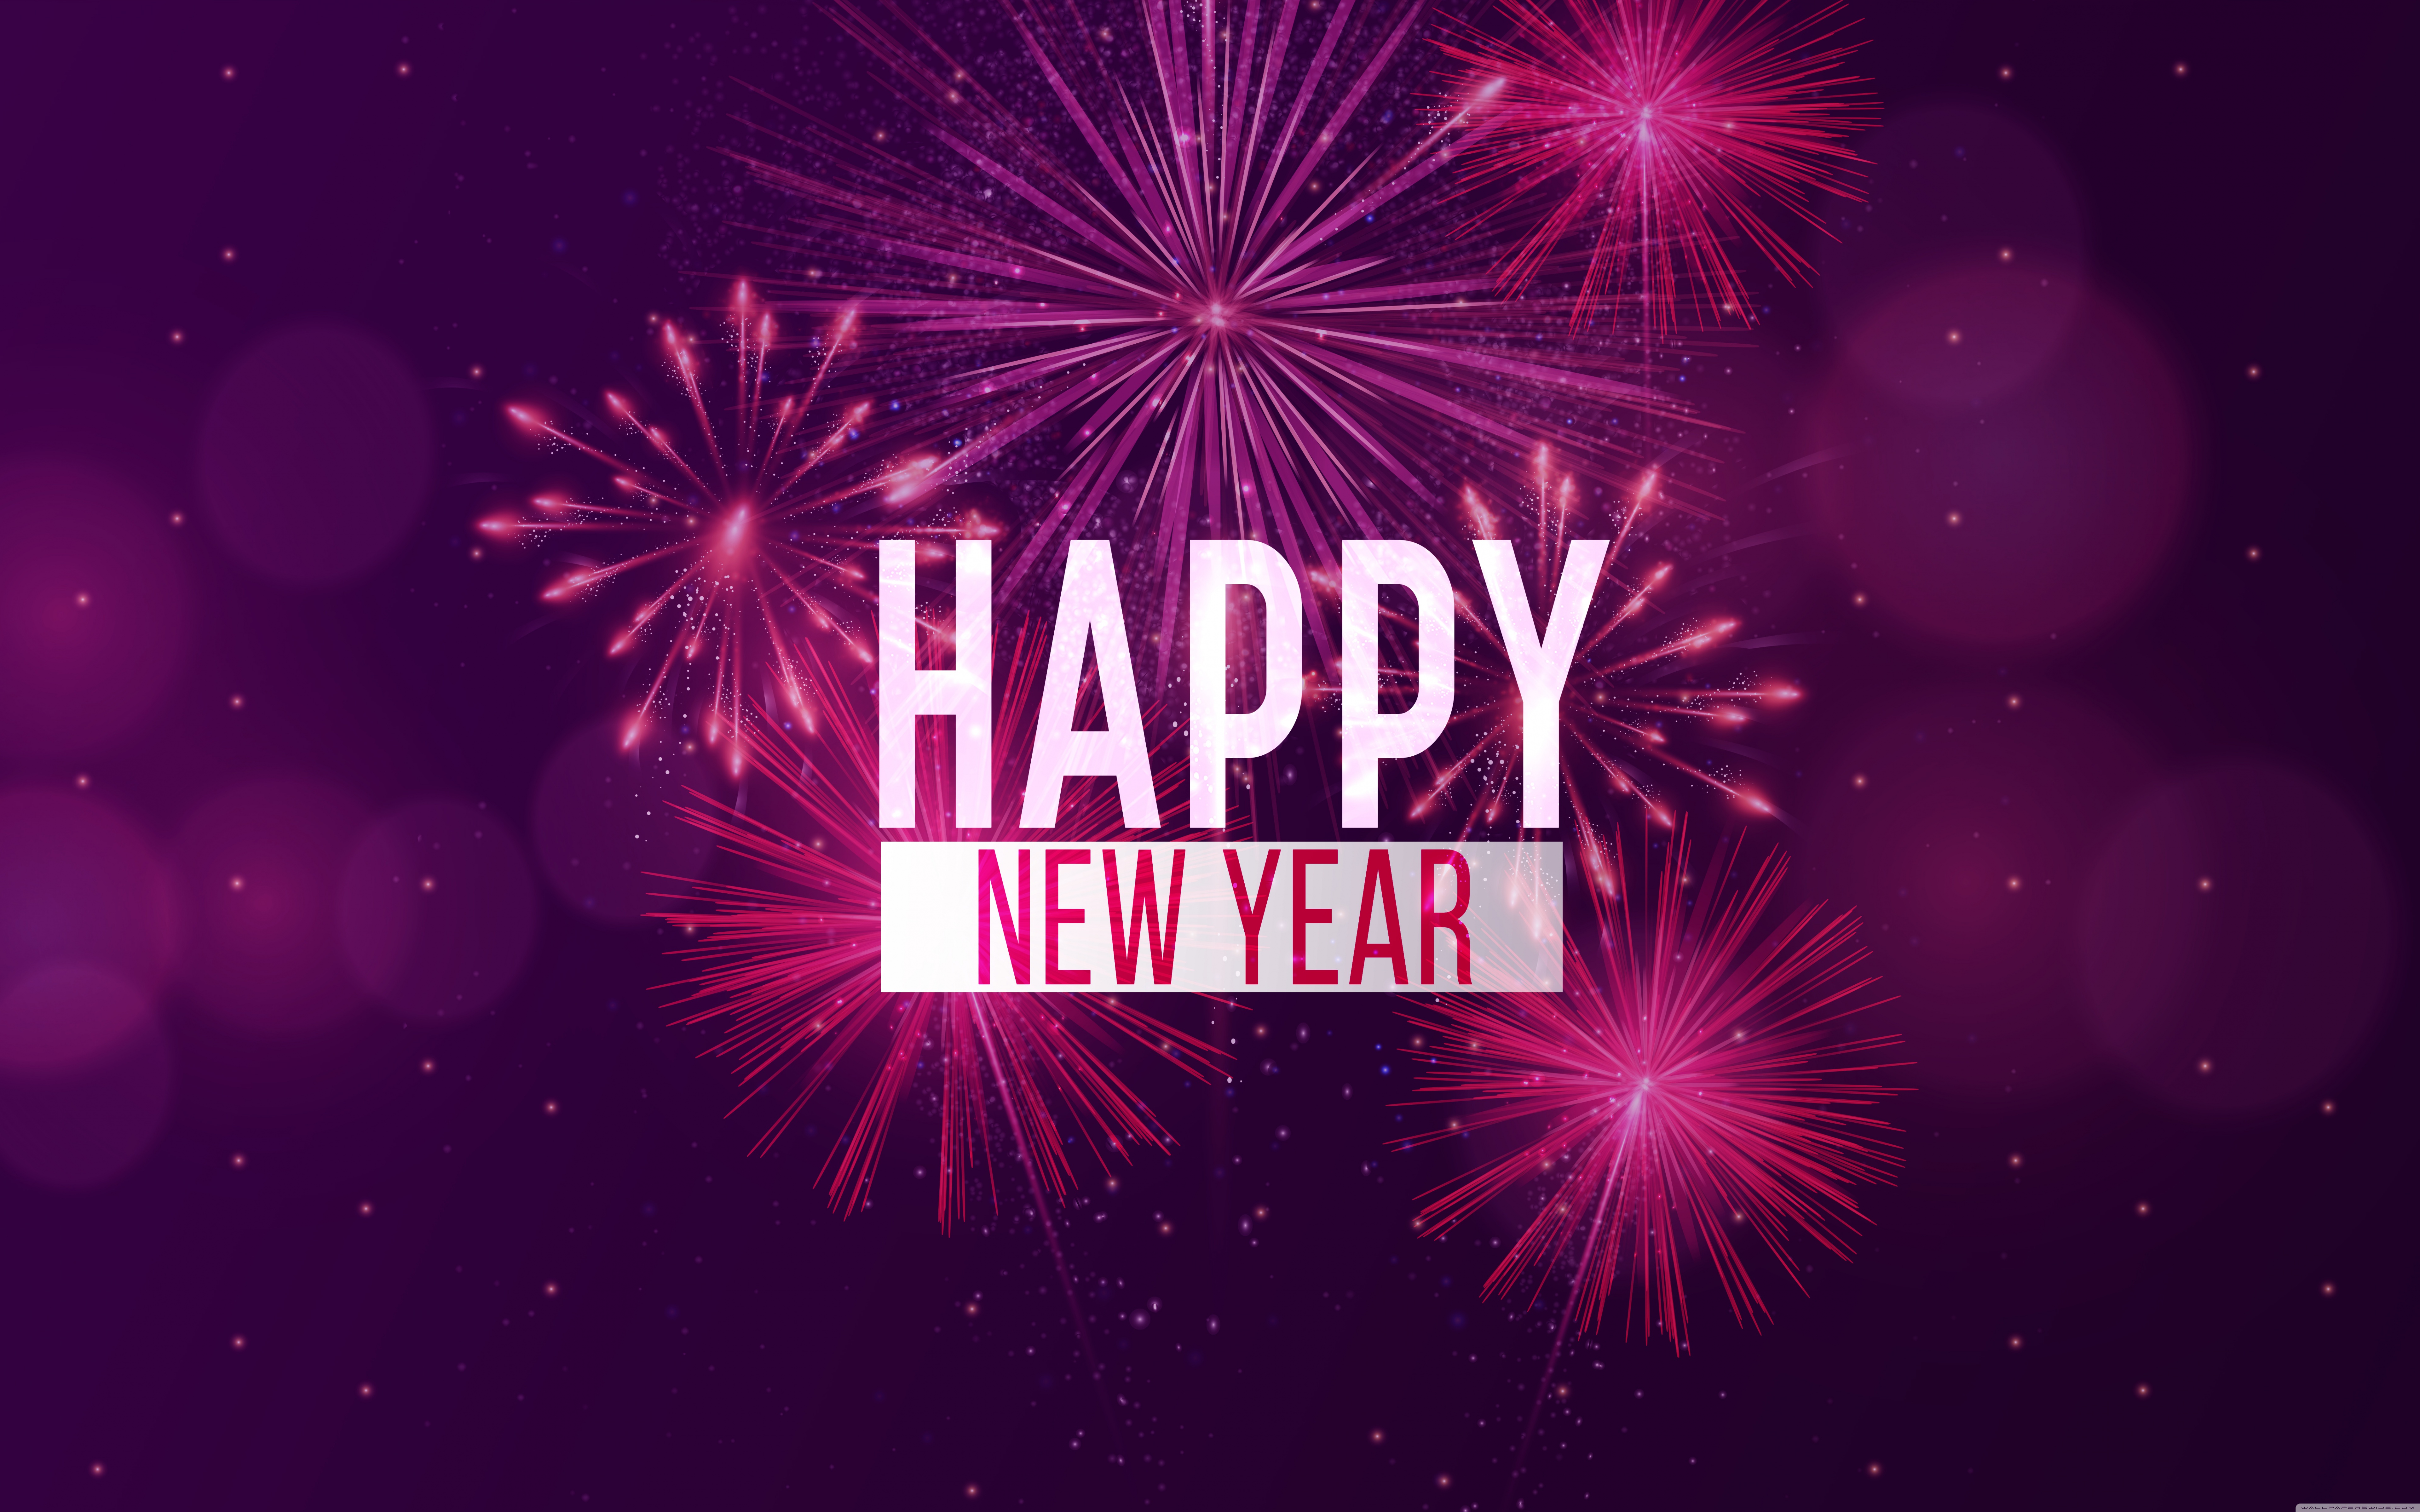 Download Happy New Year UltraHD Free Wallpaper.